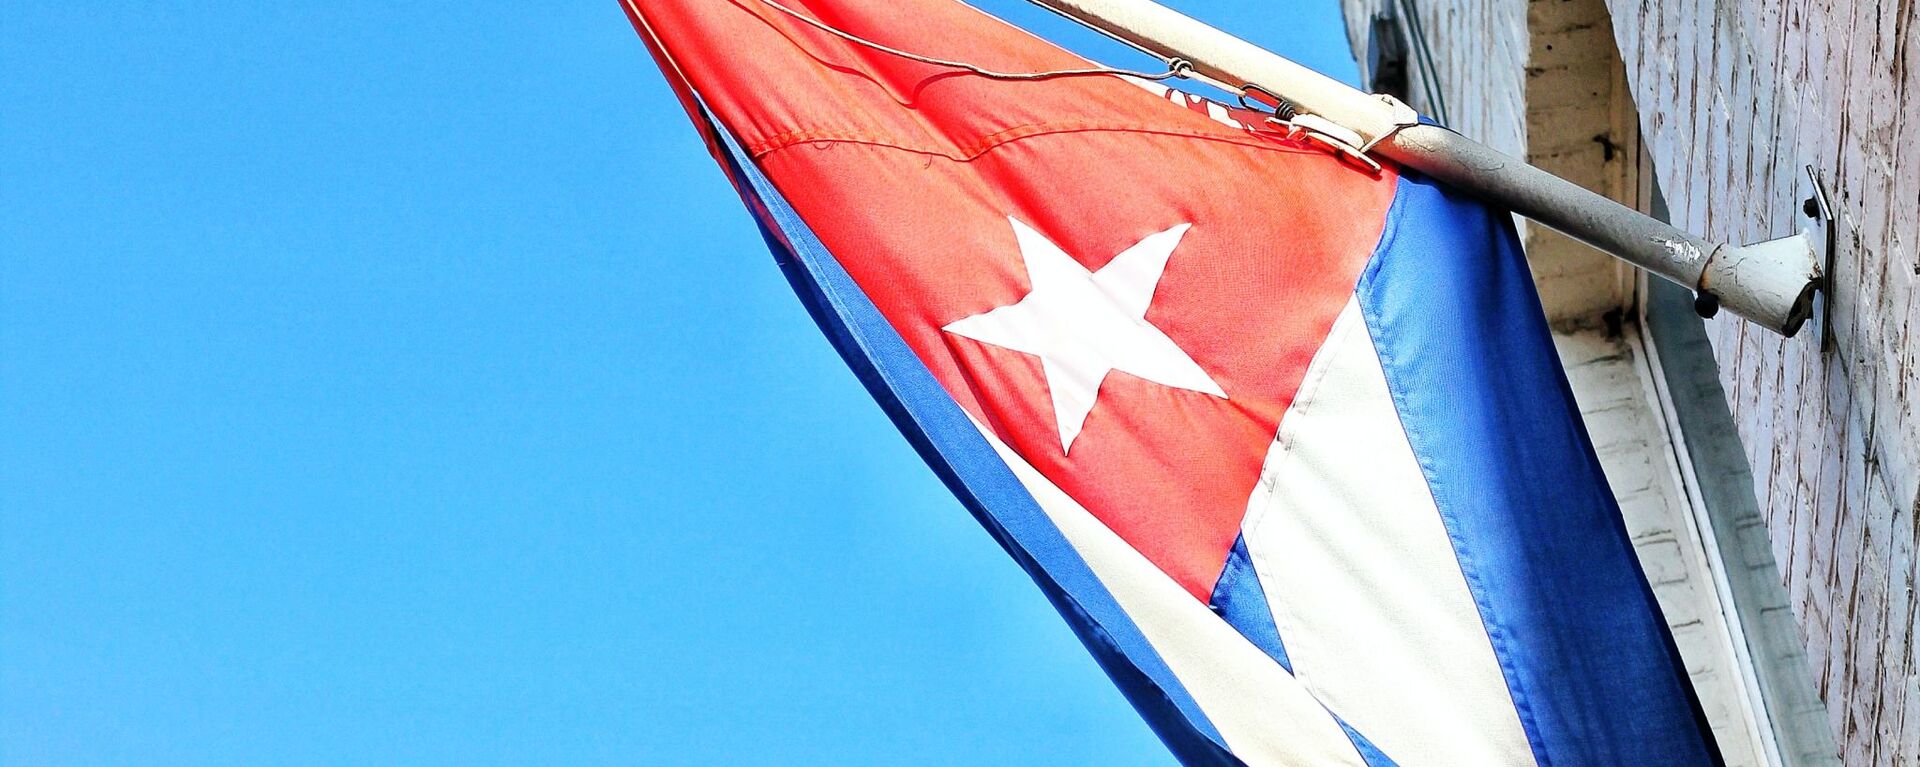 La bandera de Cuba - Sputnik Mundo, 1920, 18.02.2021